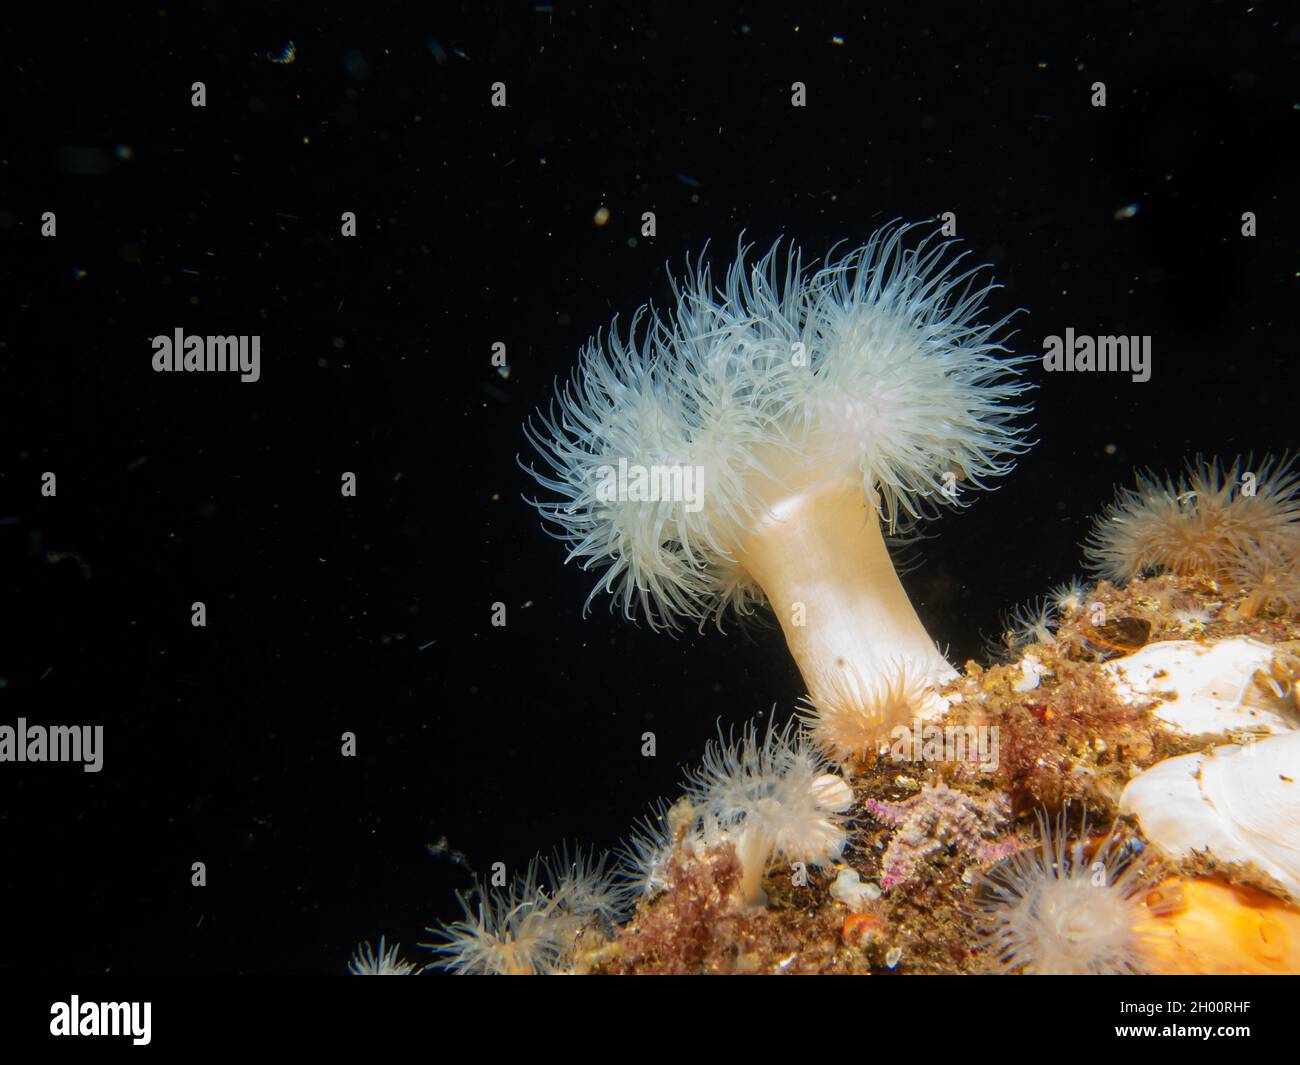 A Frilled anemone, or Metridium senile at a Swedish Weather Island reef Stock Photo